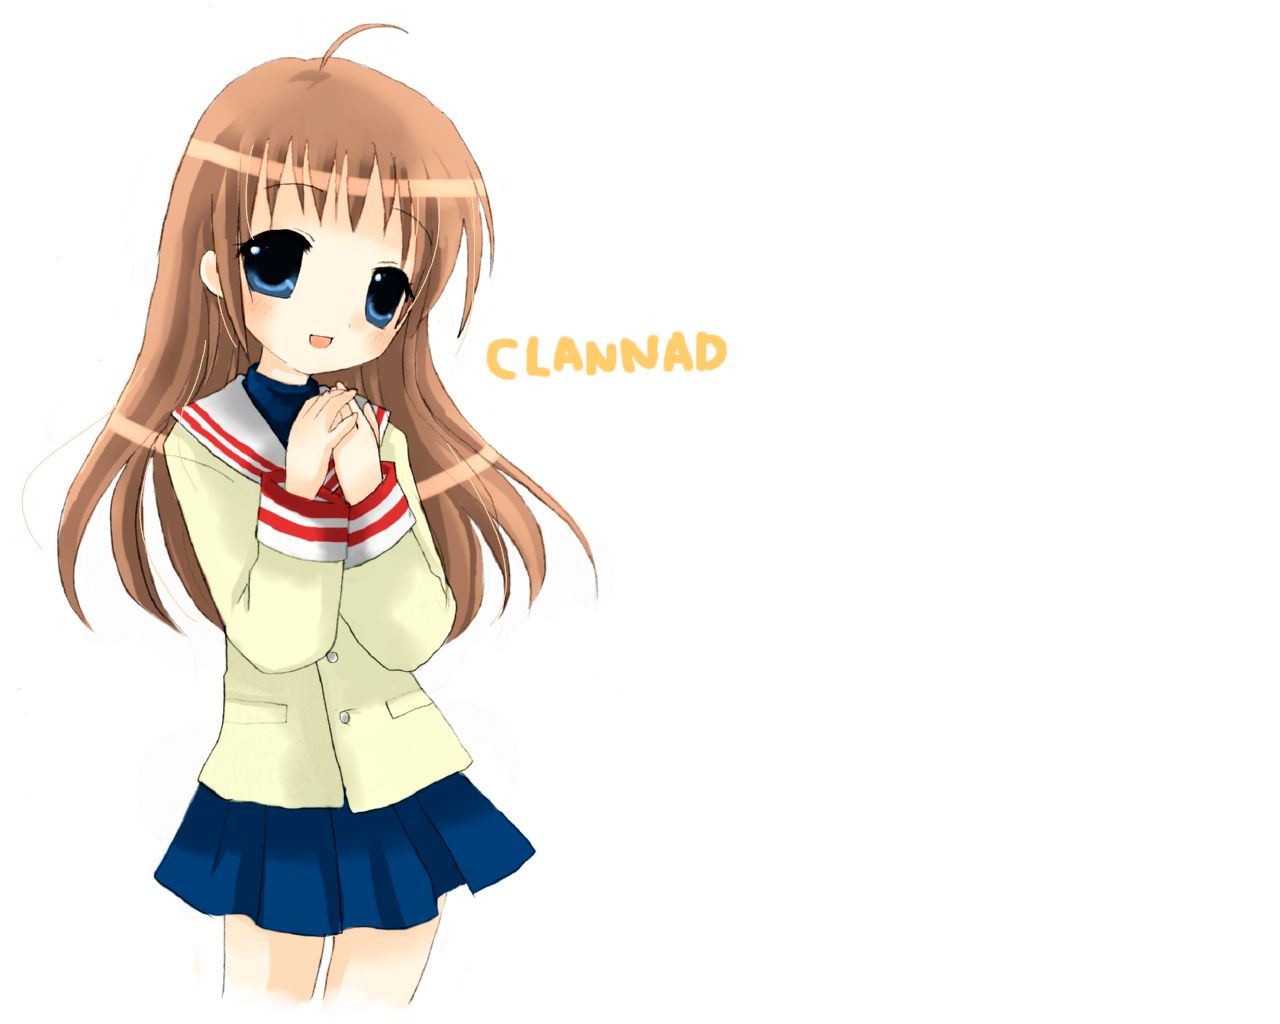 CLANNAD (クラナド) - Yukine Miyazawa (宮沢 有紀音)